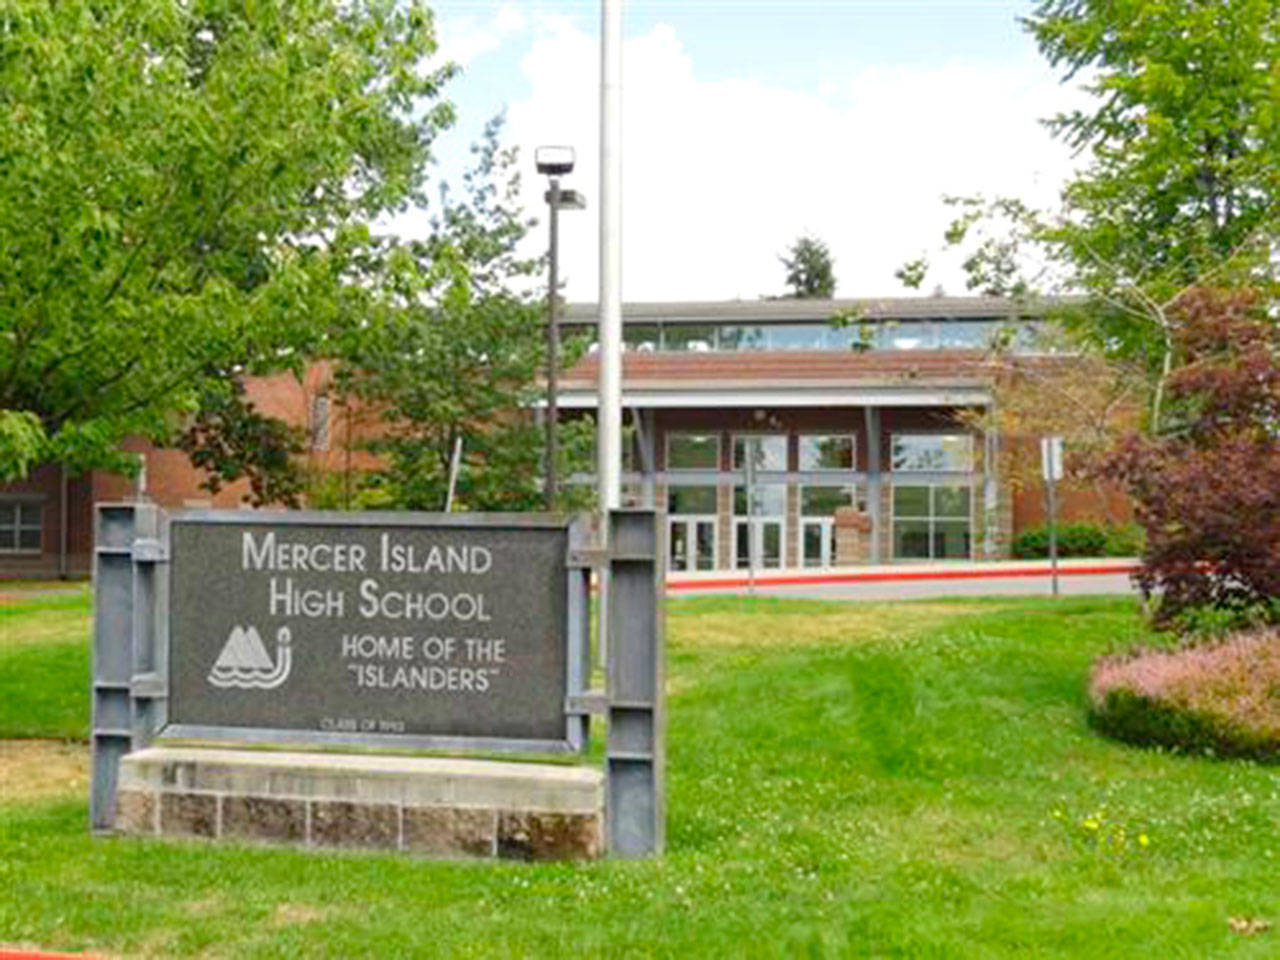 Mercer Island High School. Photo courtesy of Mercer Island School District